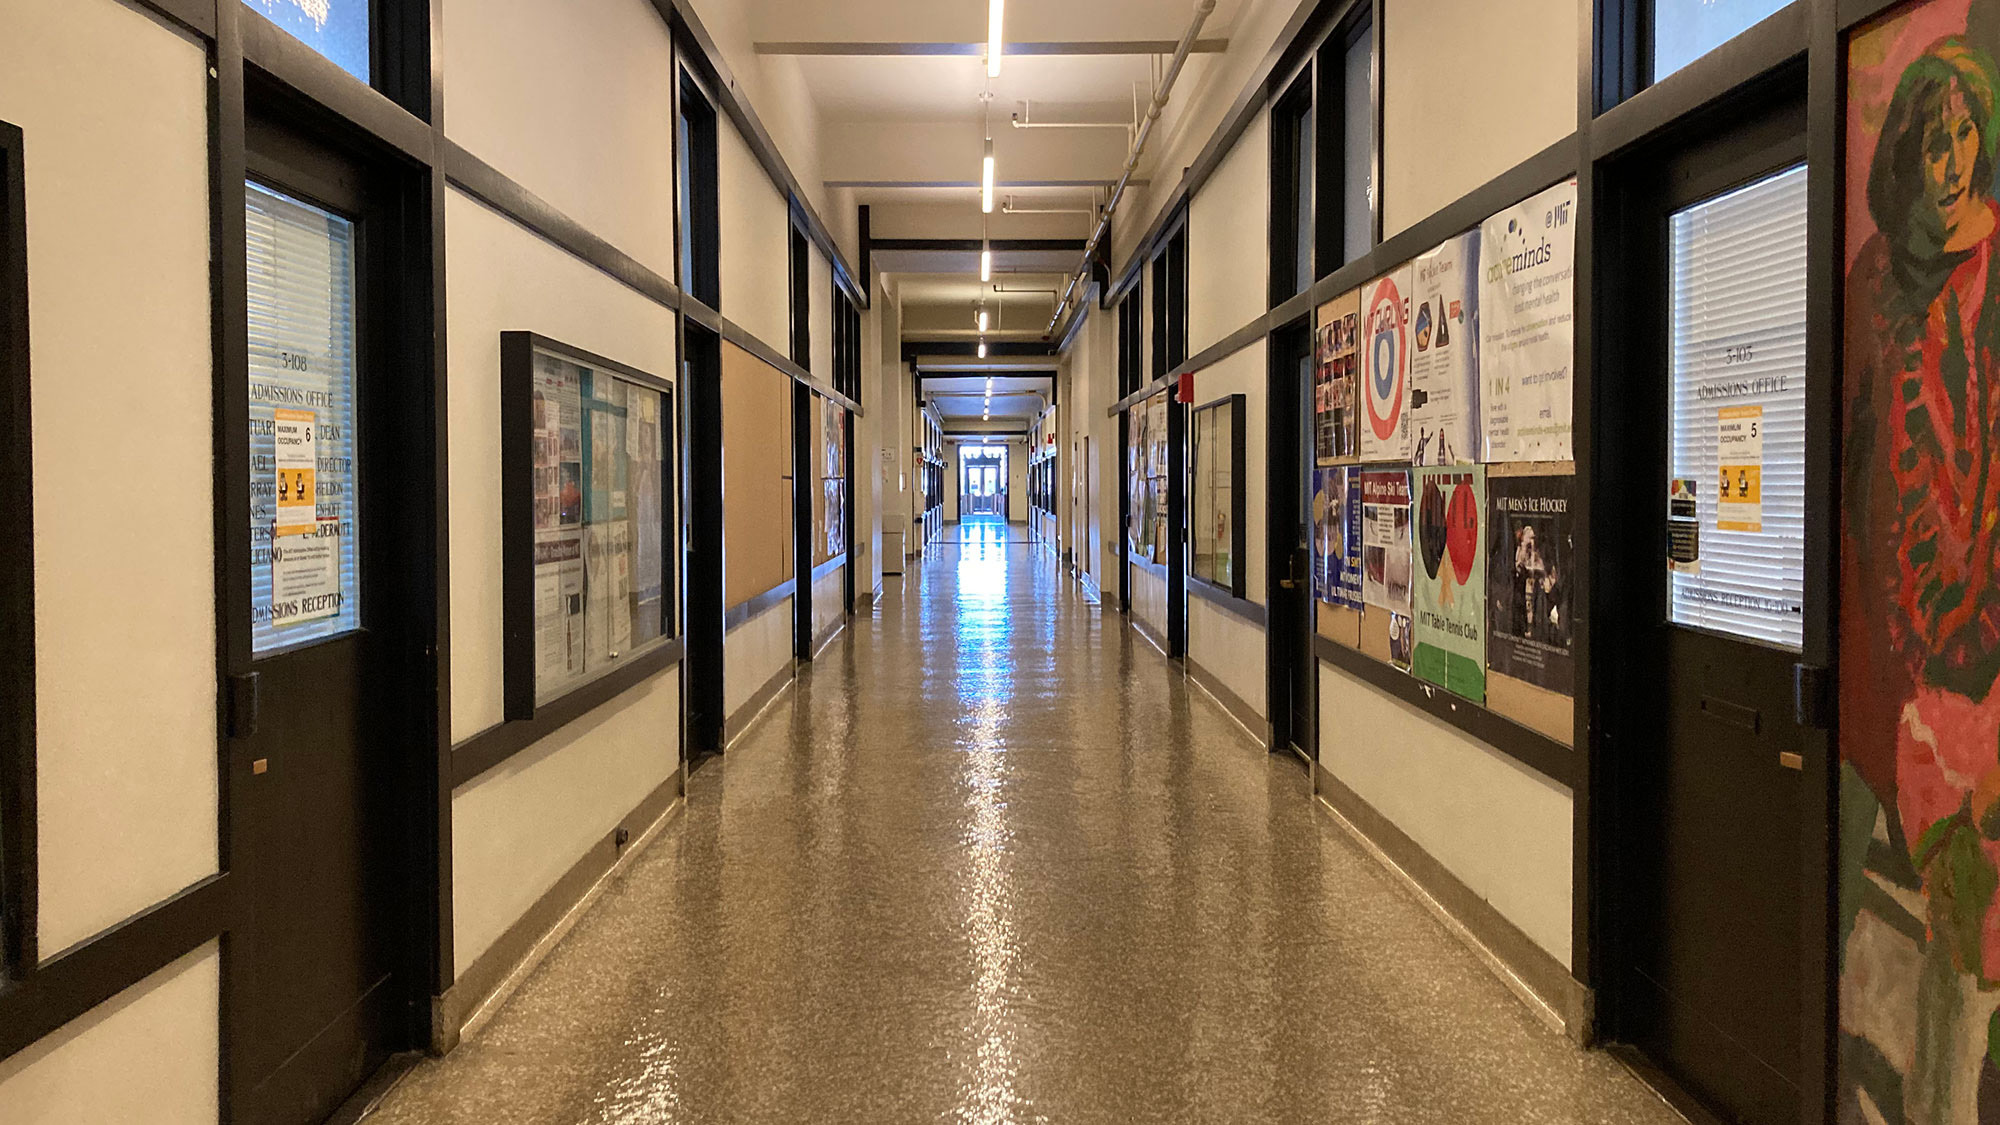 The interior of a long hallway corridor at MIT.